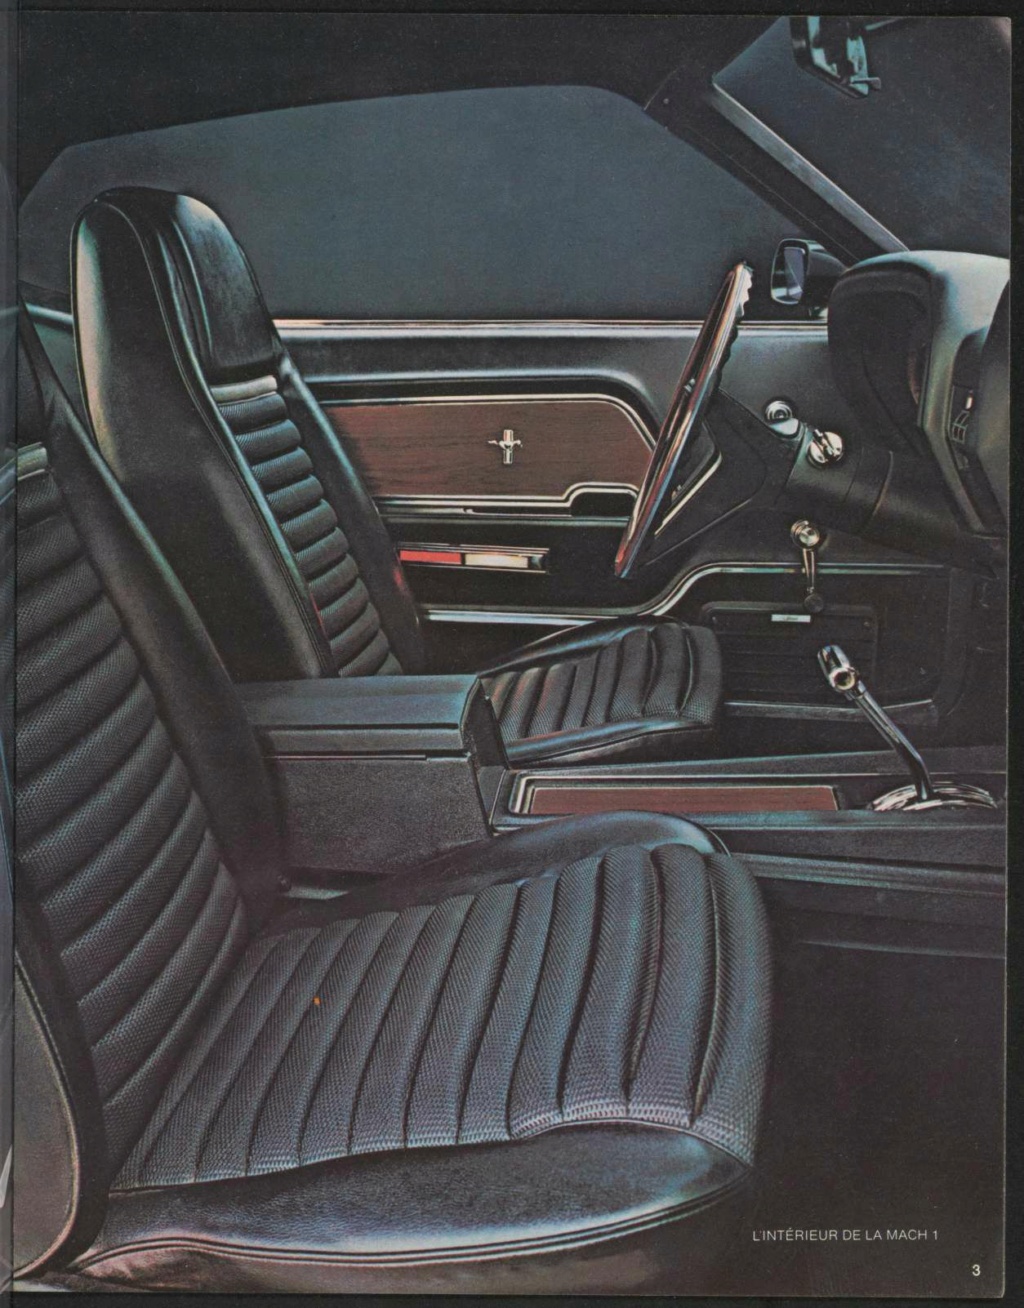  Brochure de vente Mustang 1970 en français (Québec) Brochu76